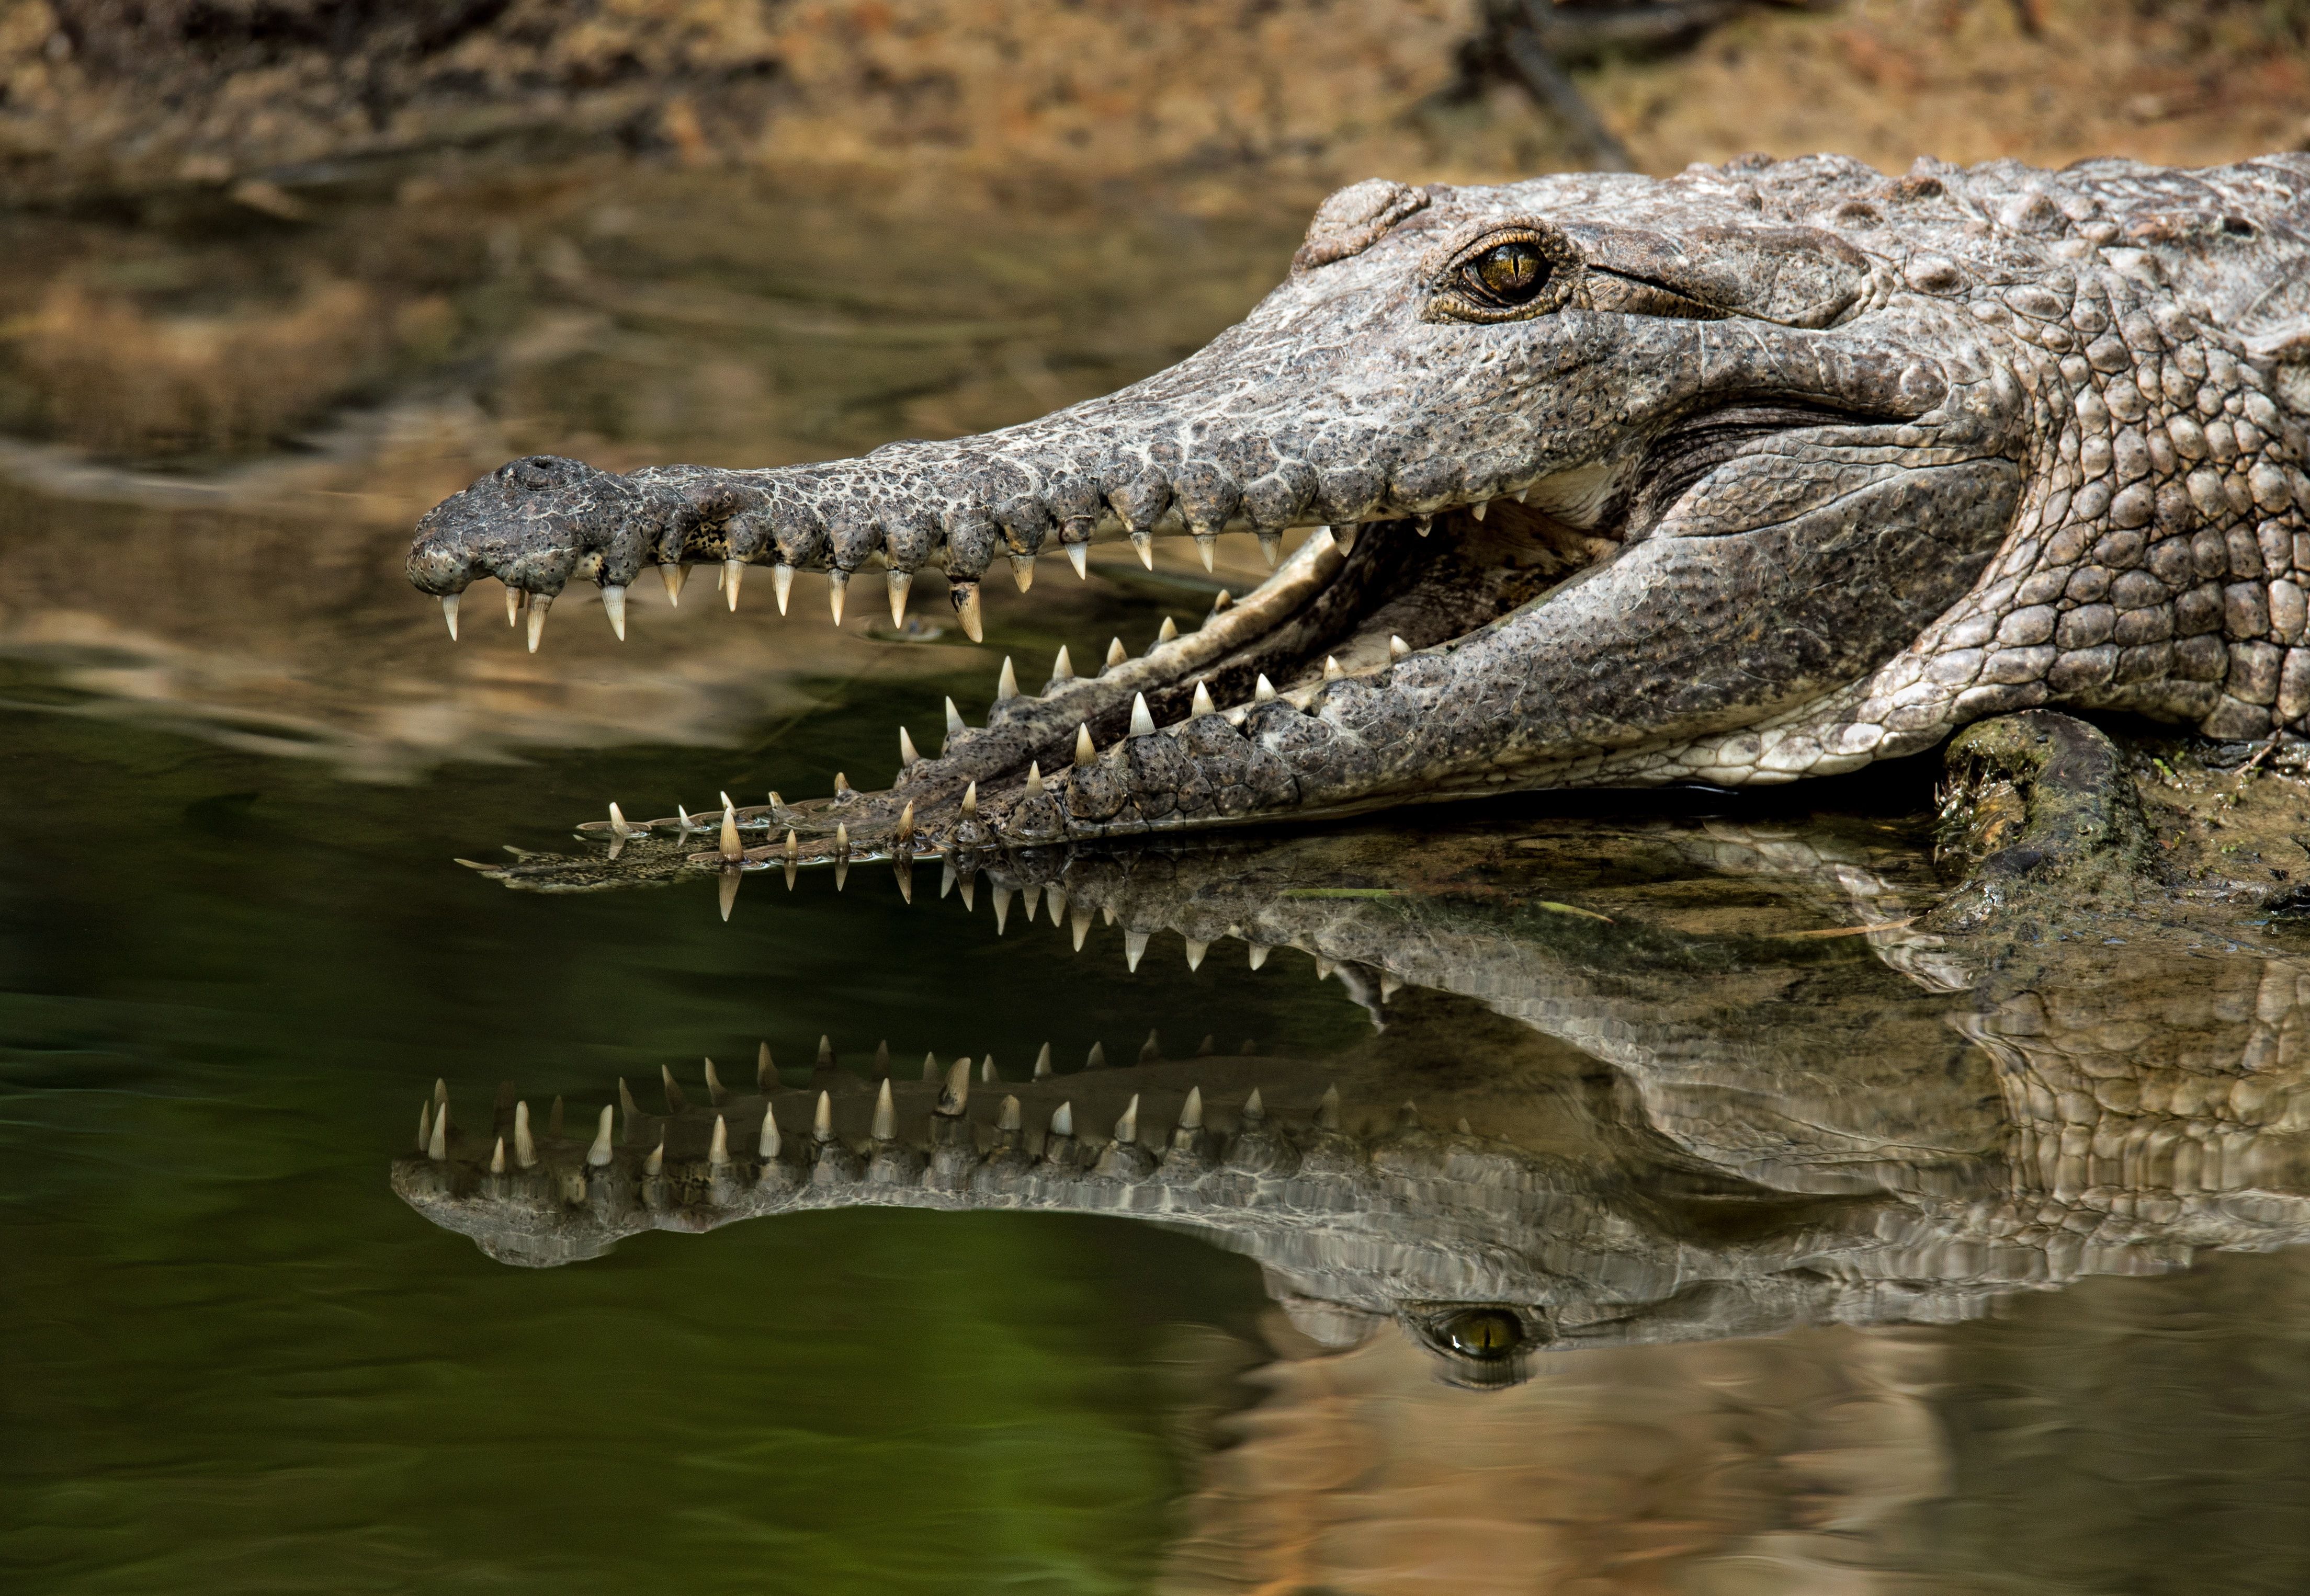 Crocodile Picture. Download Free Image